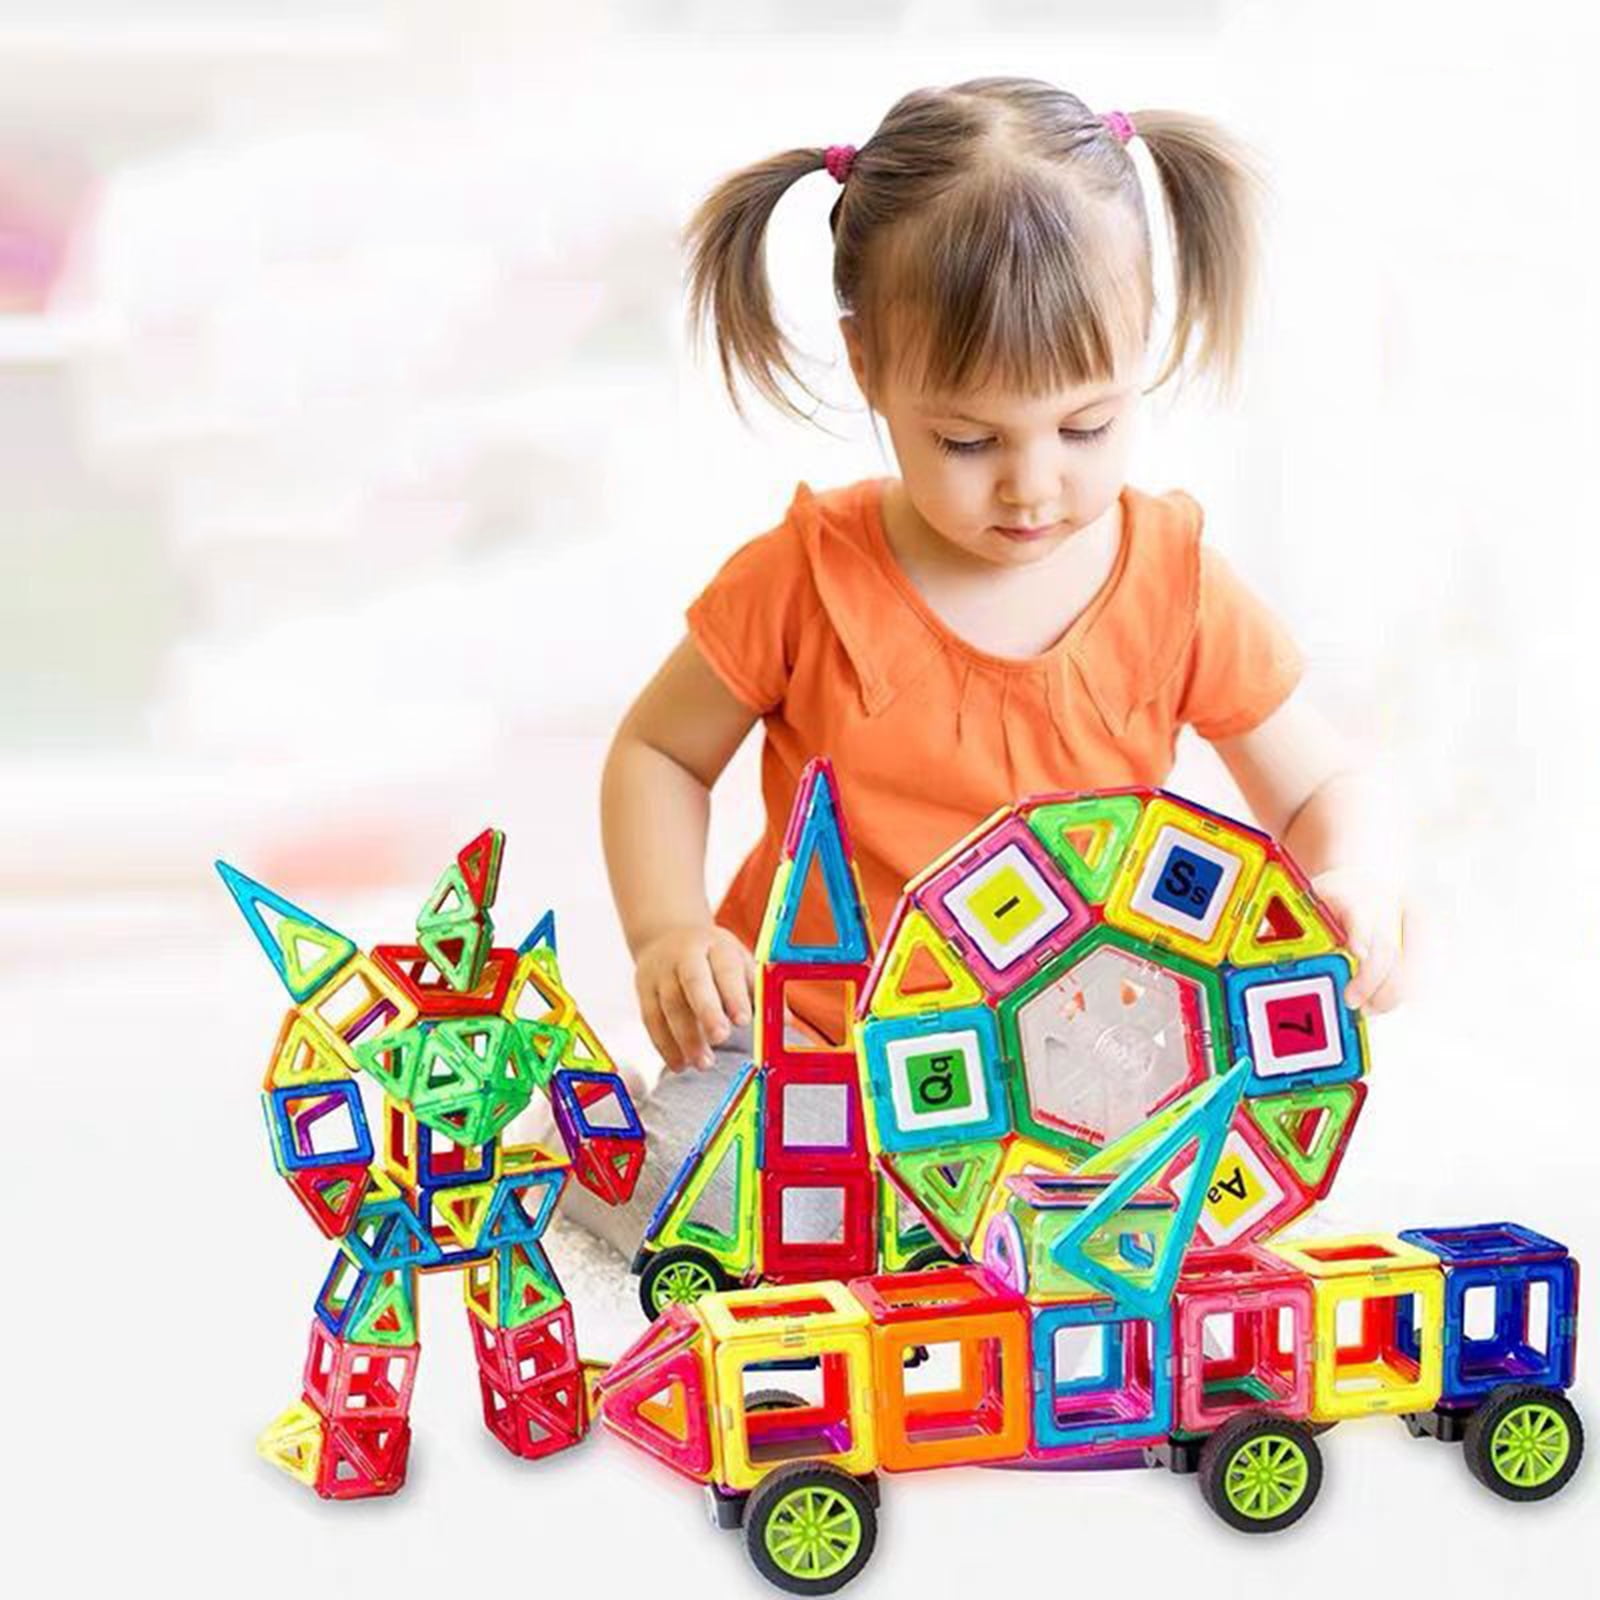 Magnet Building Tiles 3DToys Magnetic Blocks Toys Gifts for Boys GirlsToddlers 